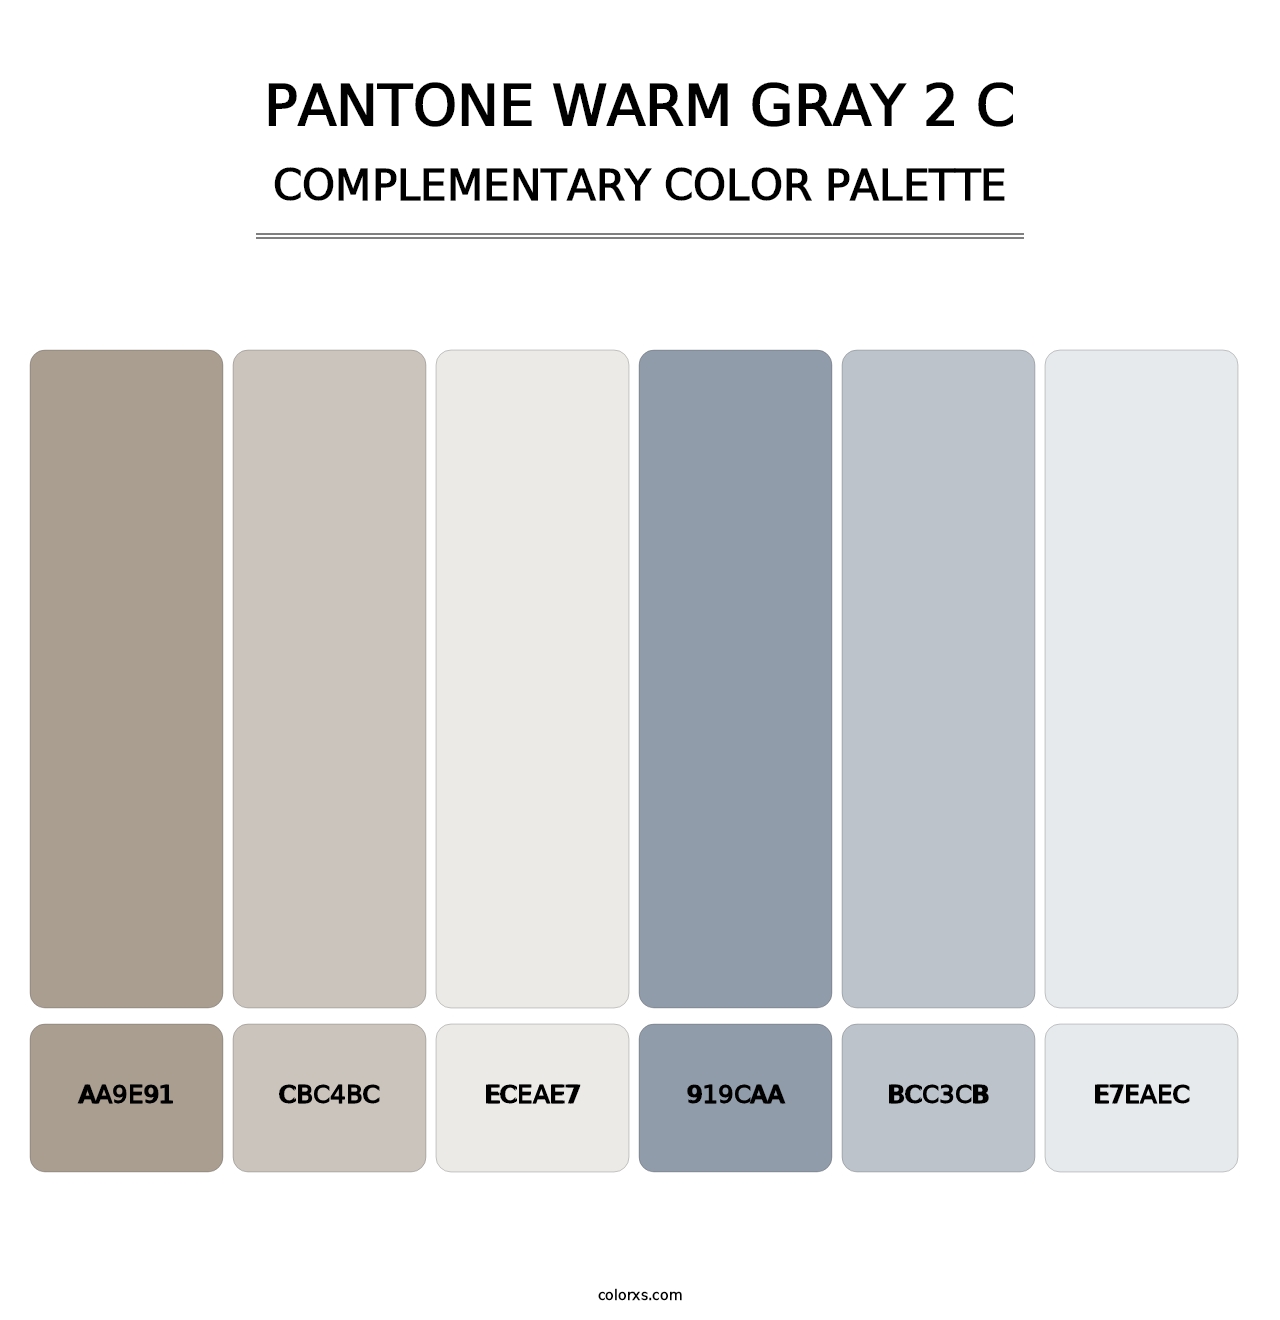 PANTONE Warm Gray 2 C - Complementary Color Palette